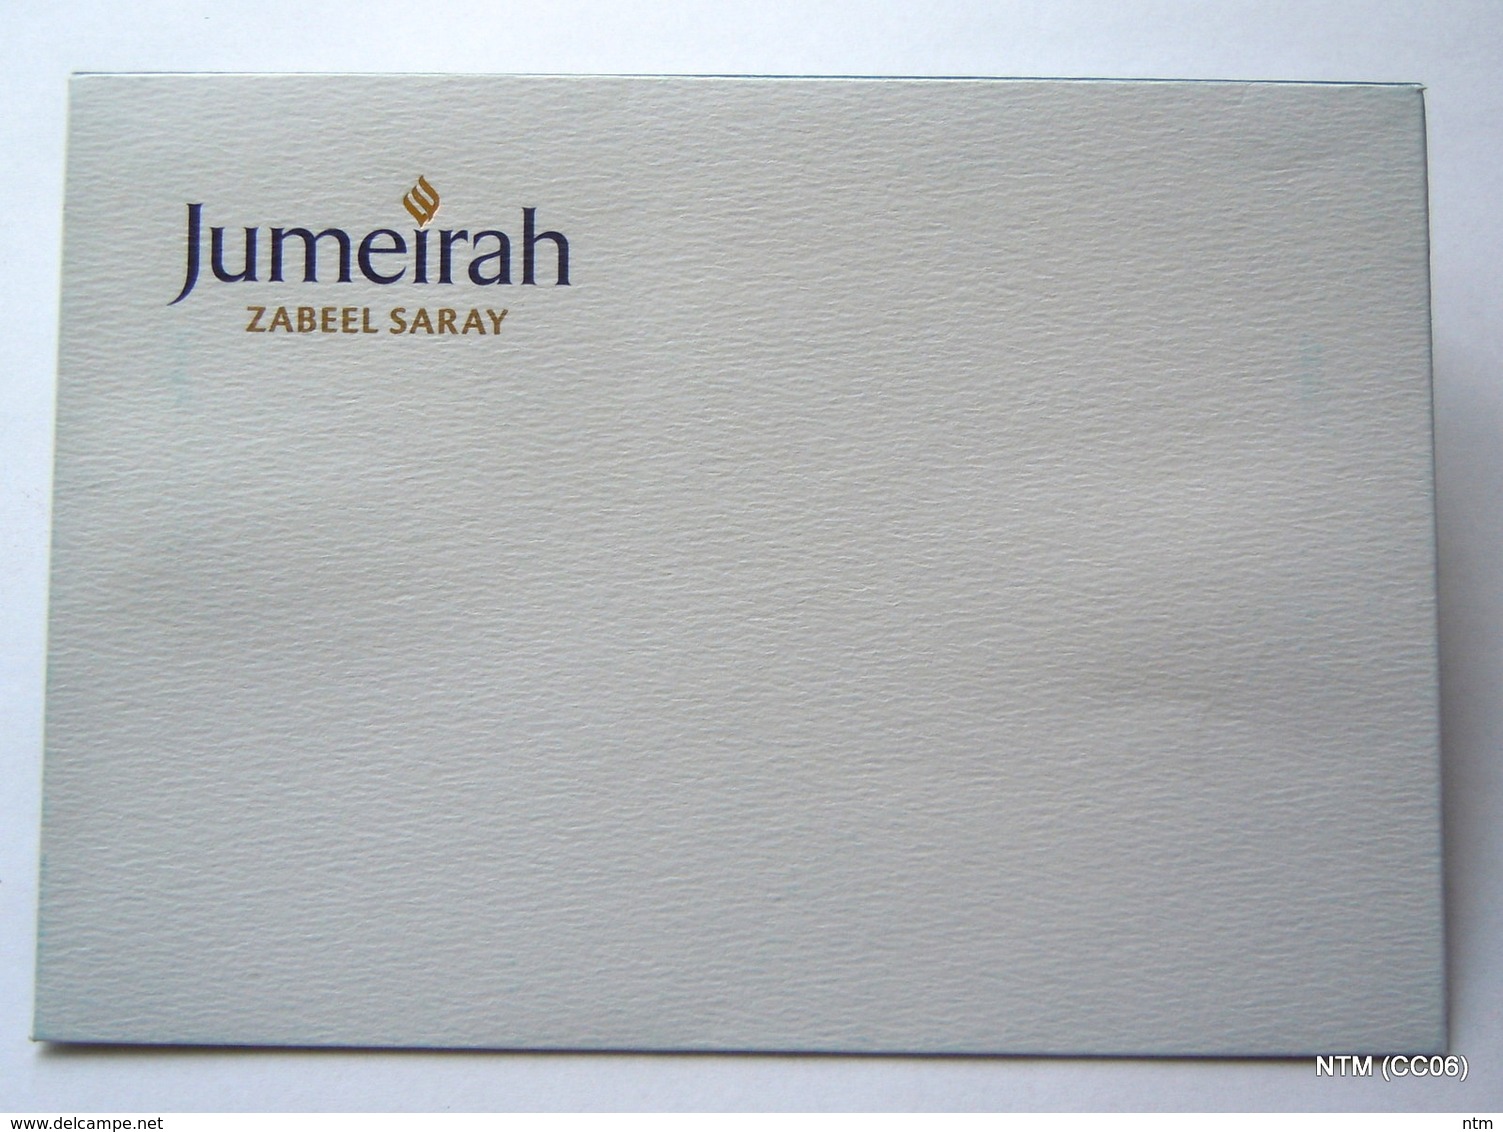 UAE DUBAI Picture Post Card (with An Envelope) Showing The Talise Ottoman Spa In Hotel 'Jumeirah Zabeel Saray' In Dubai, - Dubai